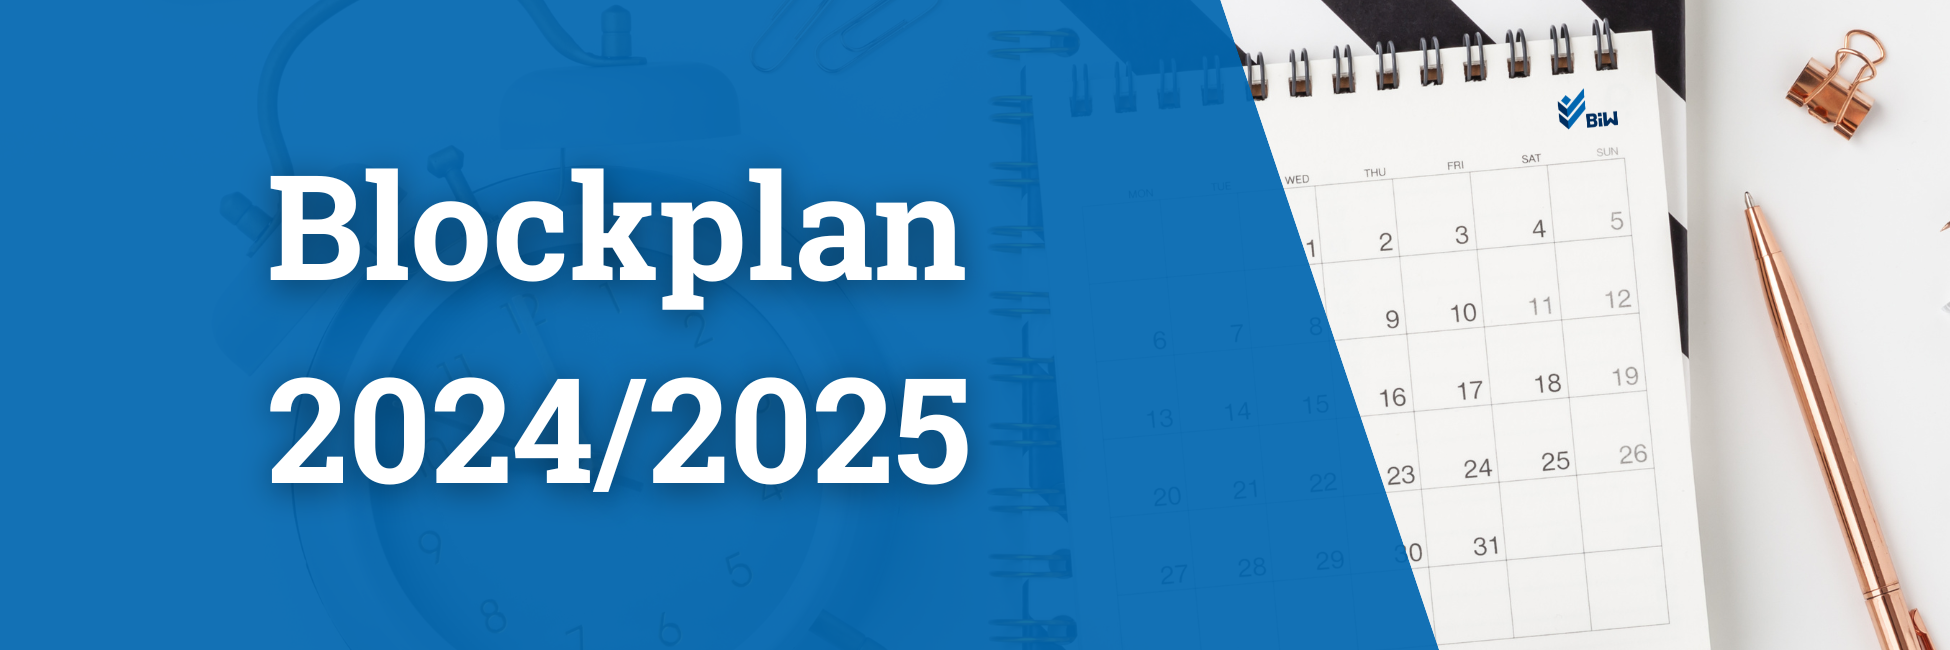 Blockplan 2024 2025